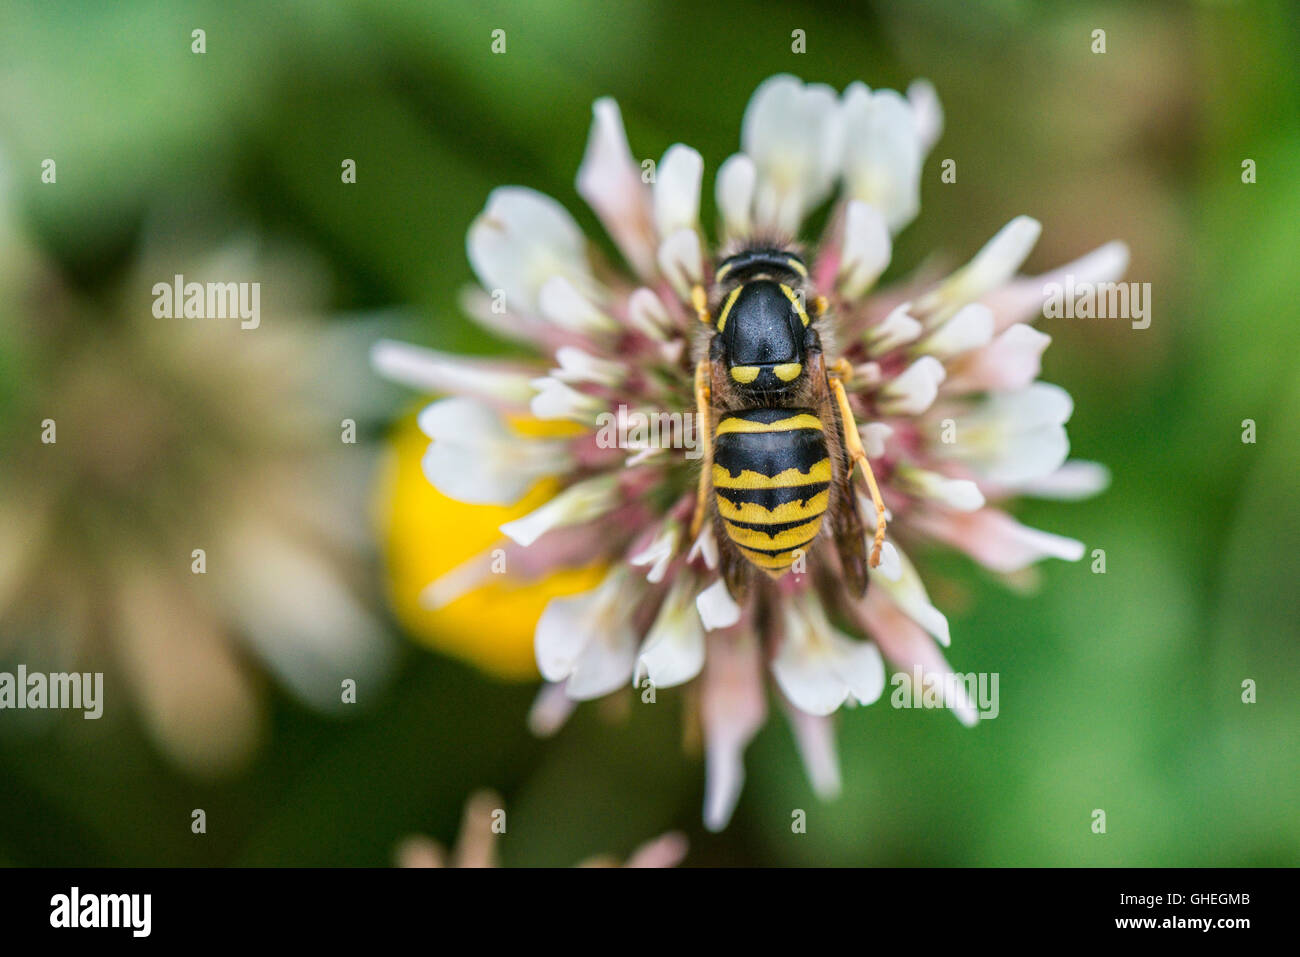 A wasp (Vespula vulgaris) on a clover flower Stock Photo